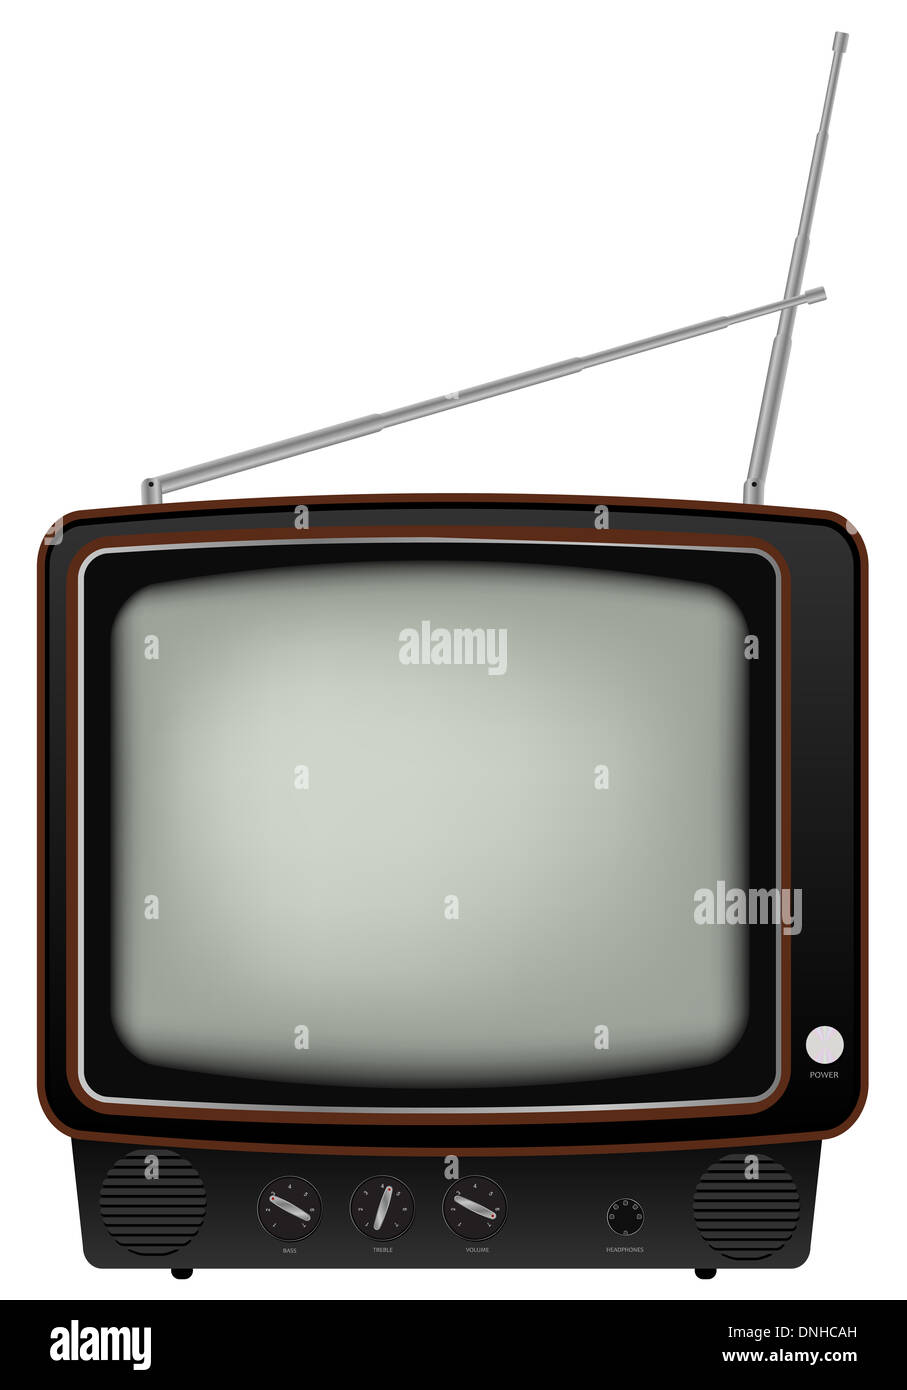 Retro TV - Illustration of Old Television Isolated on White Background Stock Photo